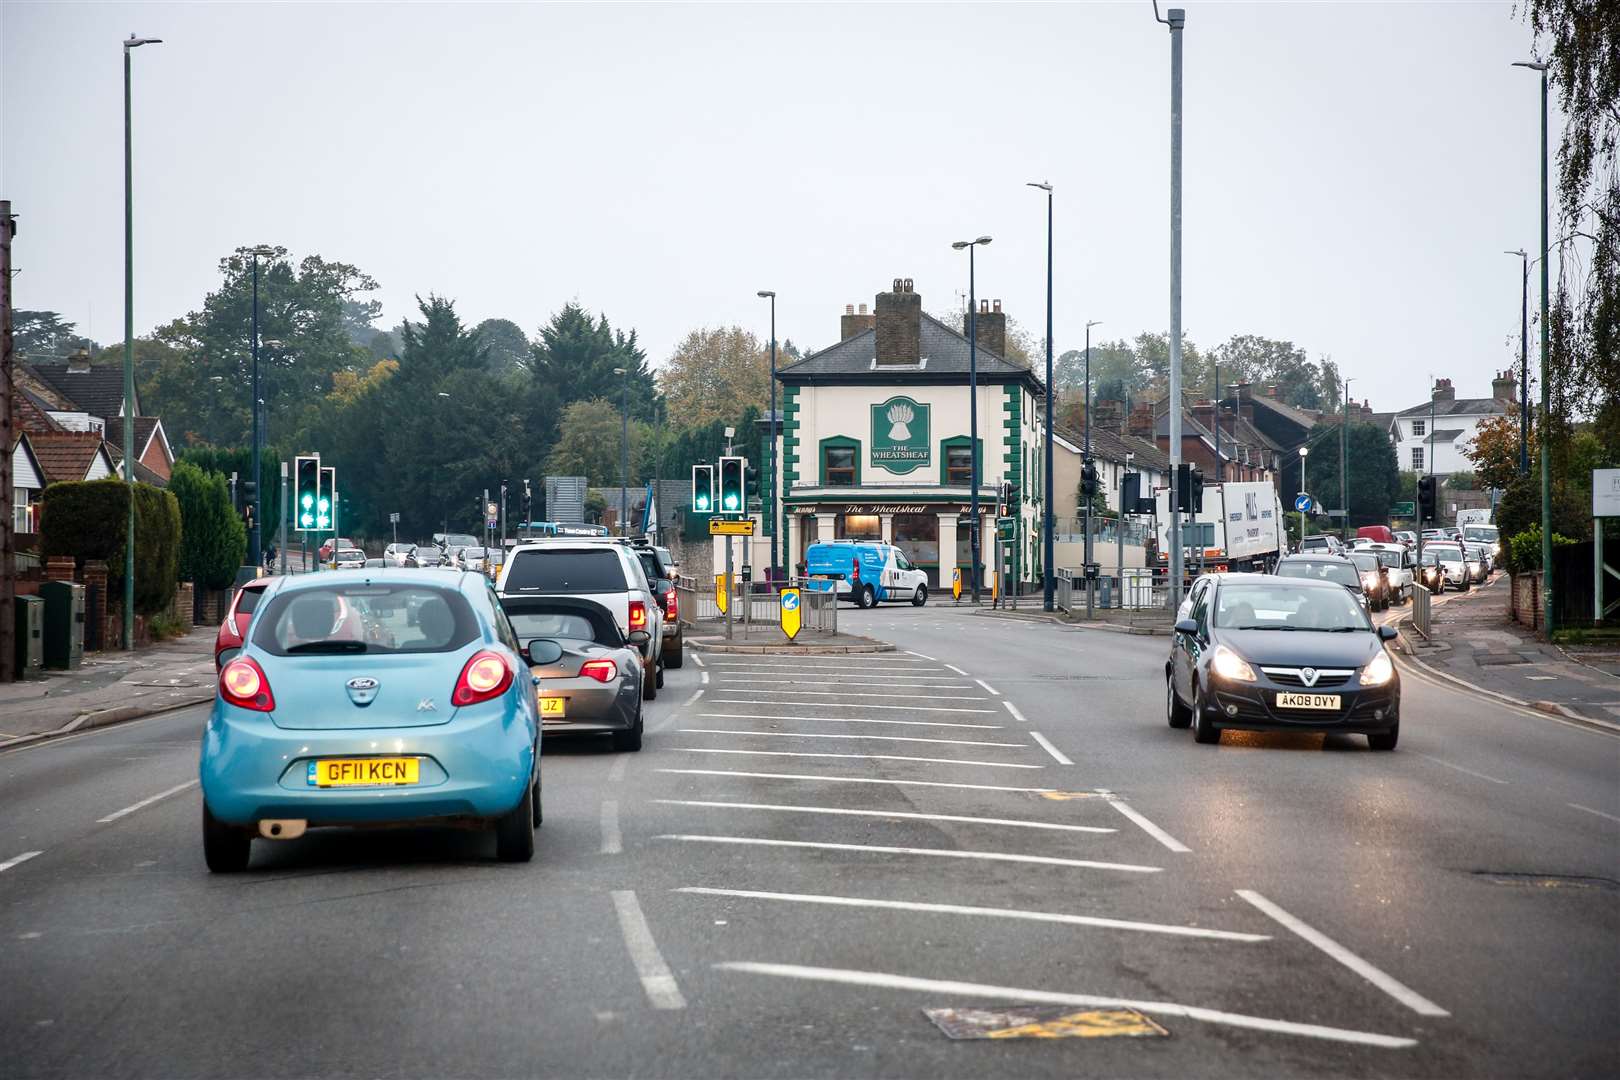 Traffic at The Wheatsheaf, Maidstone Picture: Matthew Walker